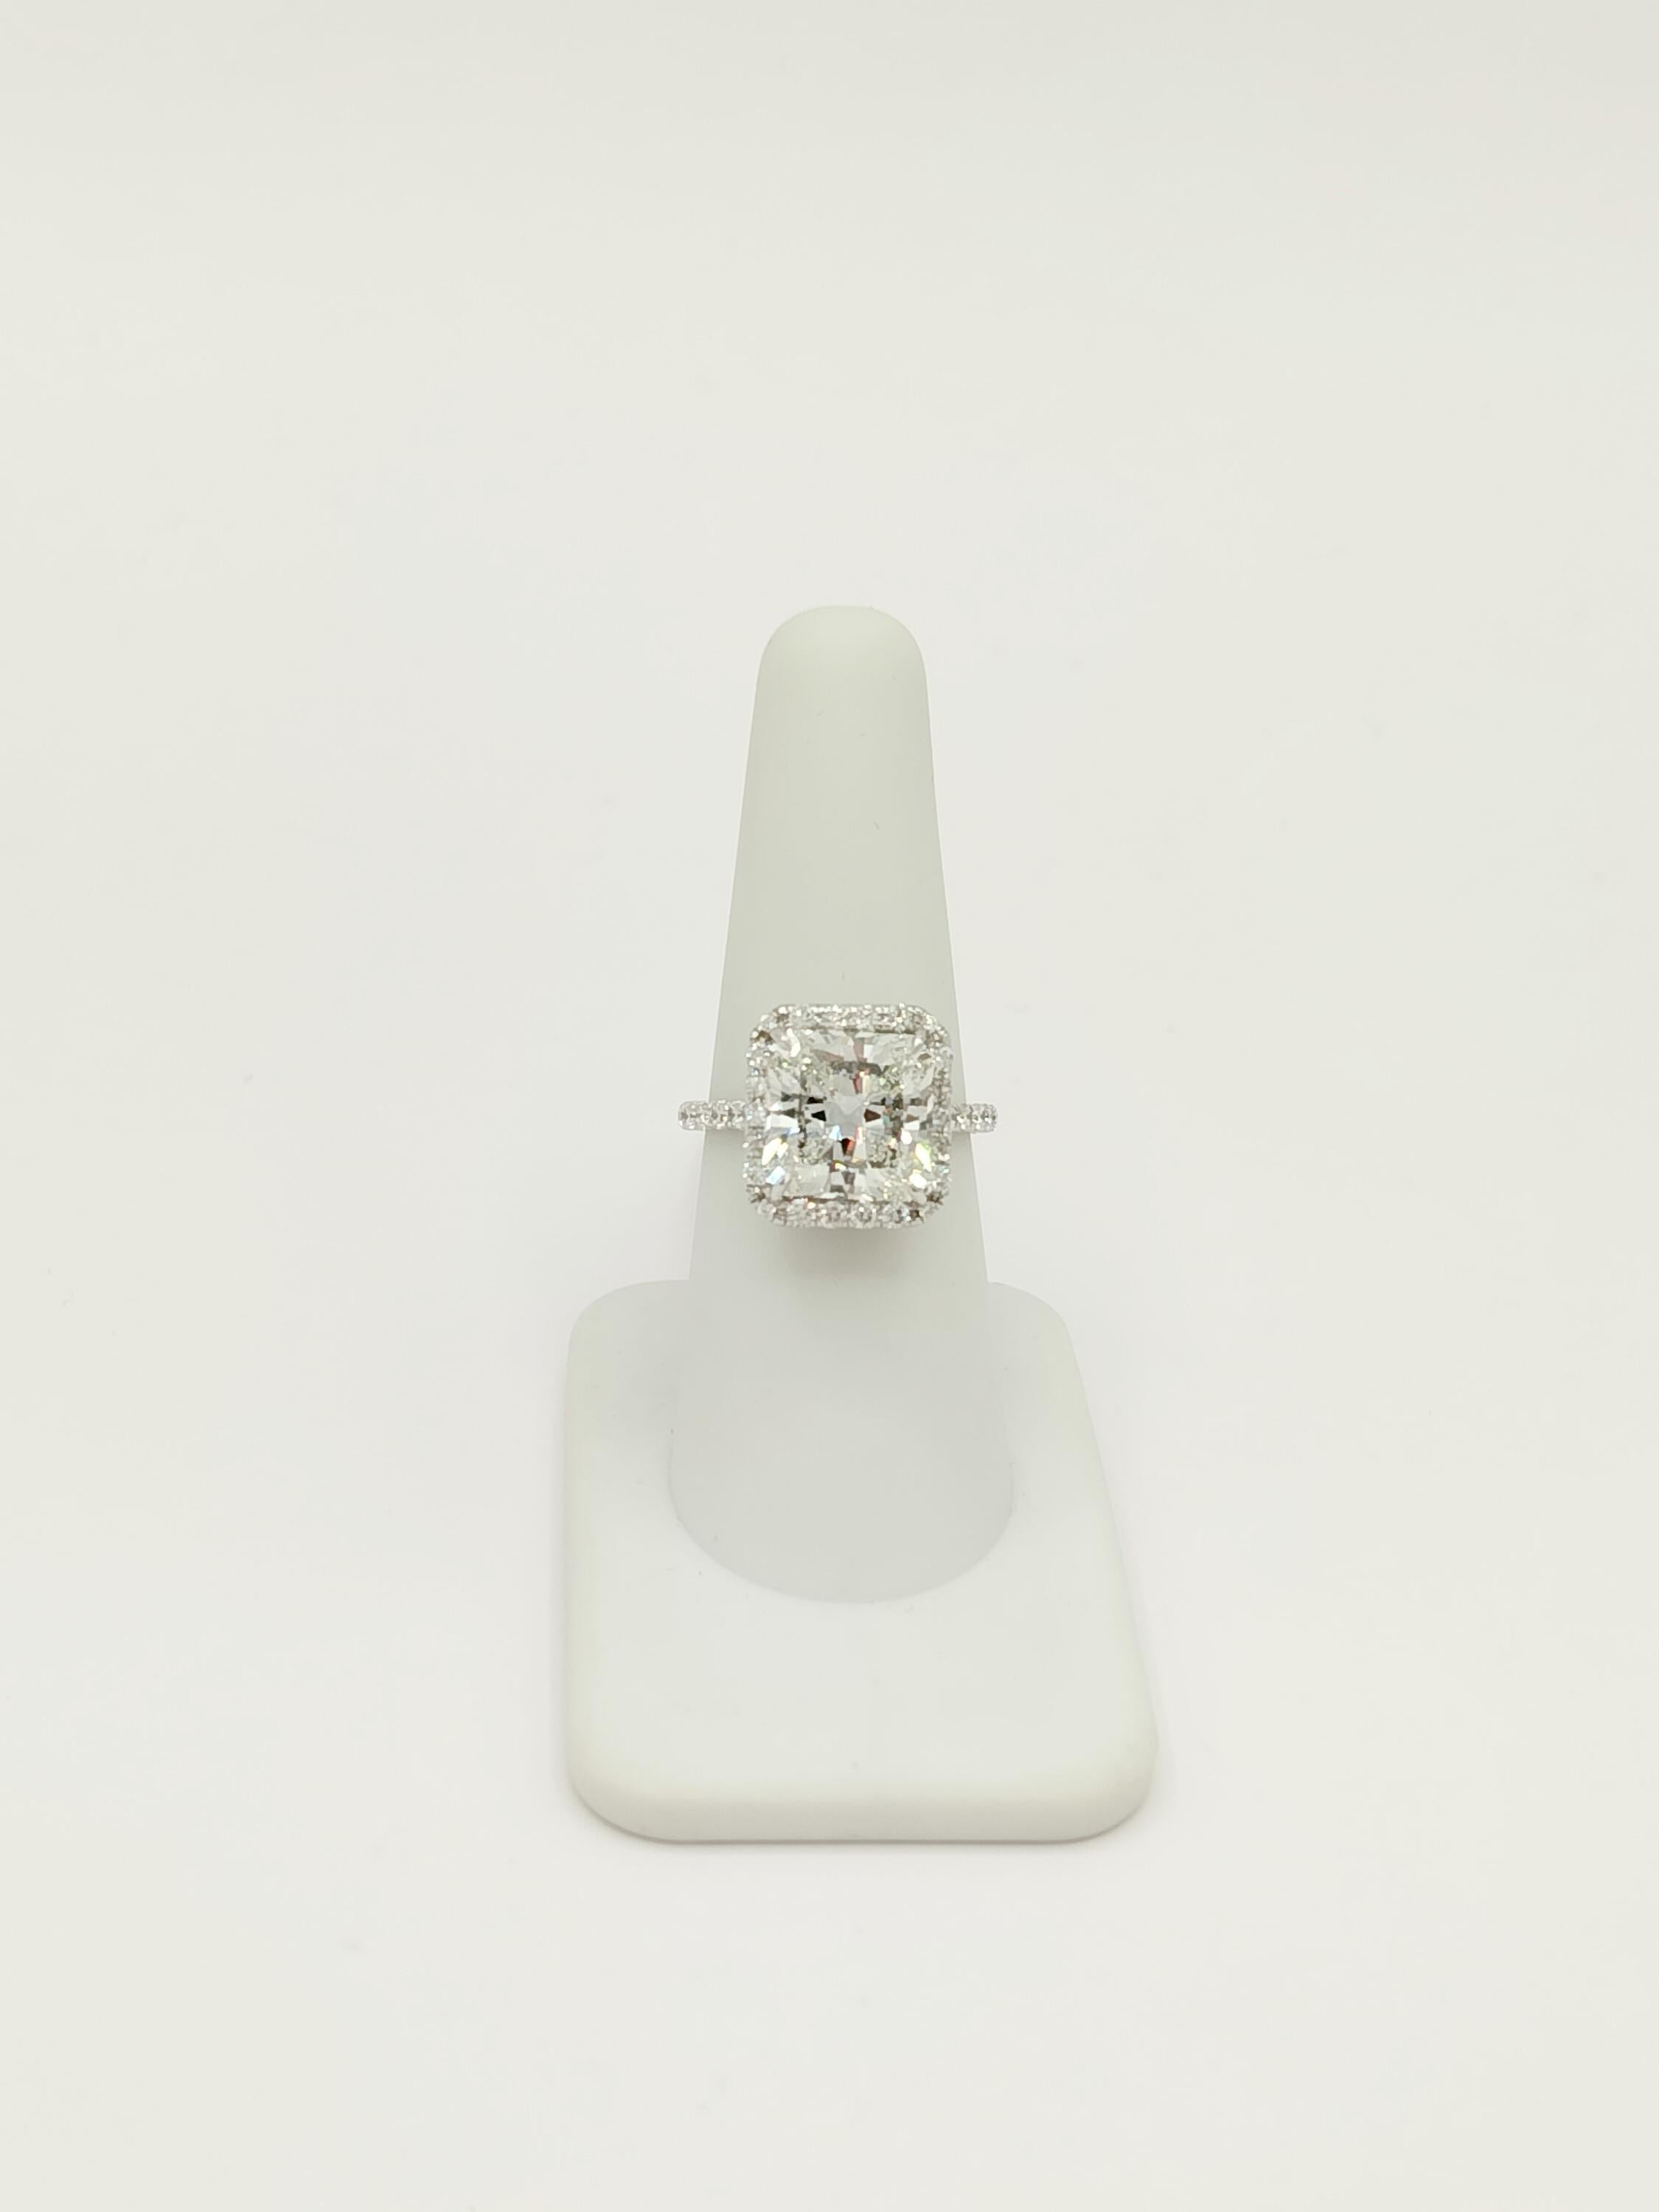 GIA 5.27 ct. White Diamond Radiant Ring on 18K White Gold For Sale 2